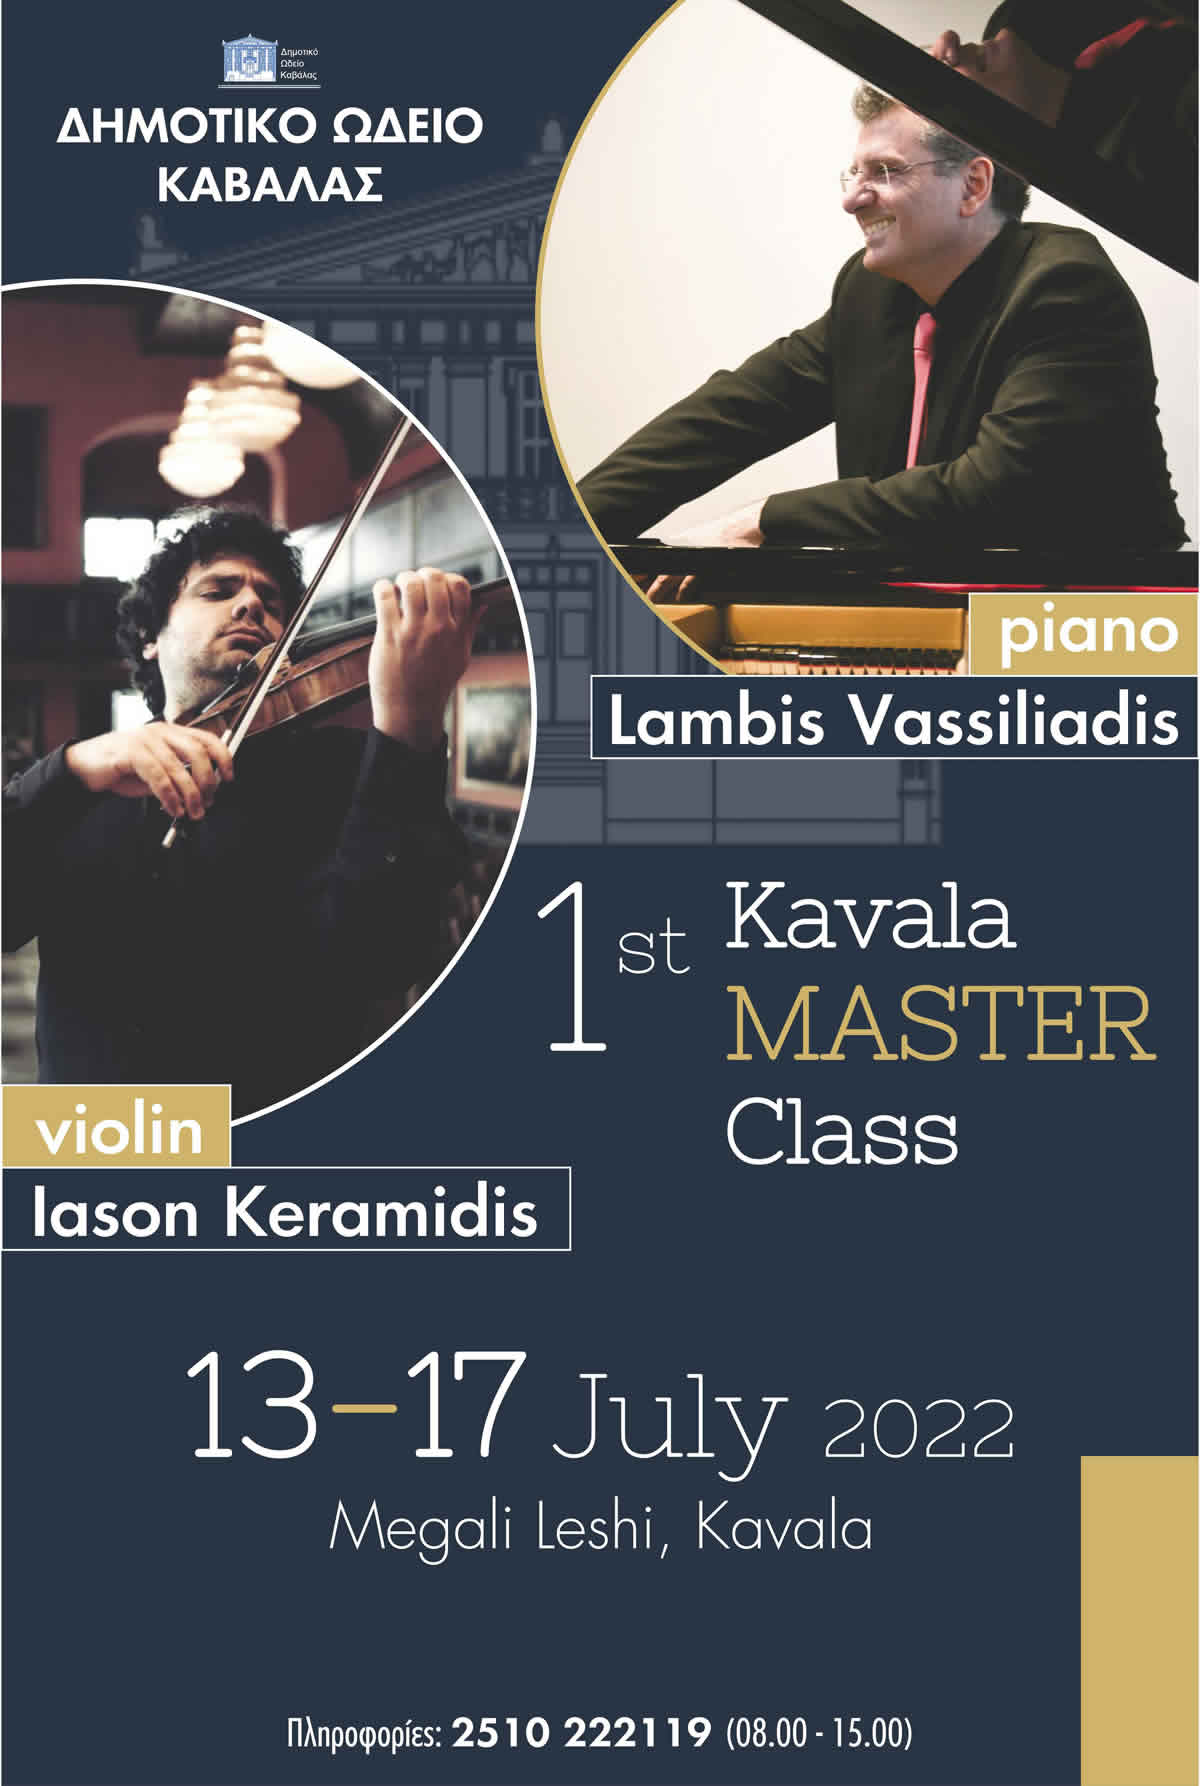 1o Kavala Master Class - Δημοτικό Ωδείο Καβάλας